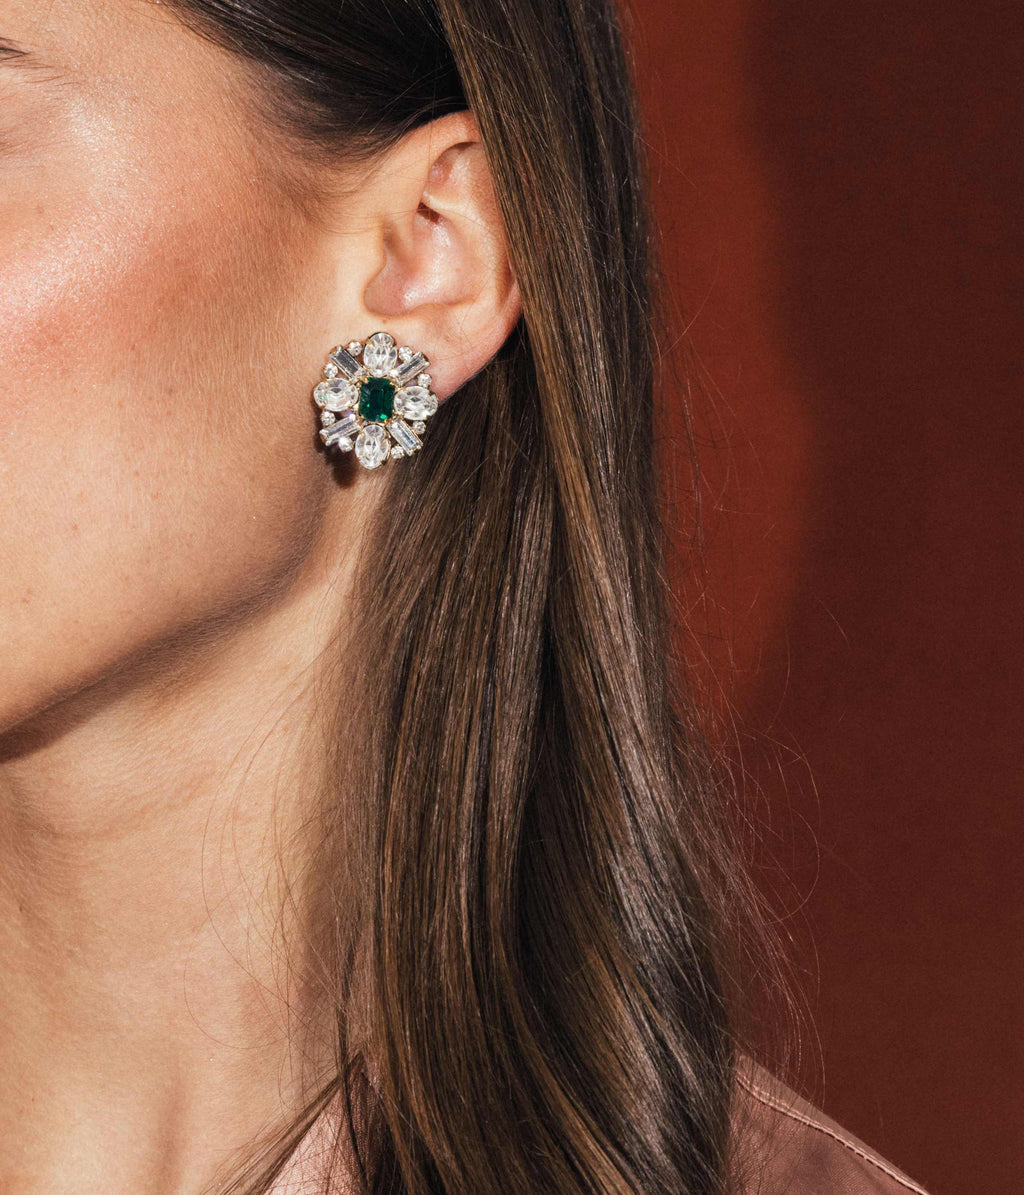 Designer Earrings | Tati Studs in Emerald Loren Hope